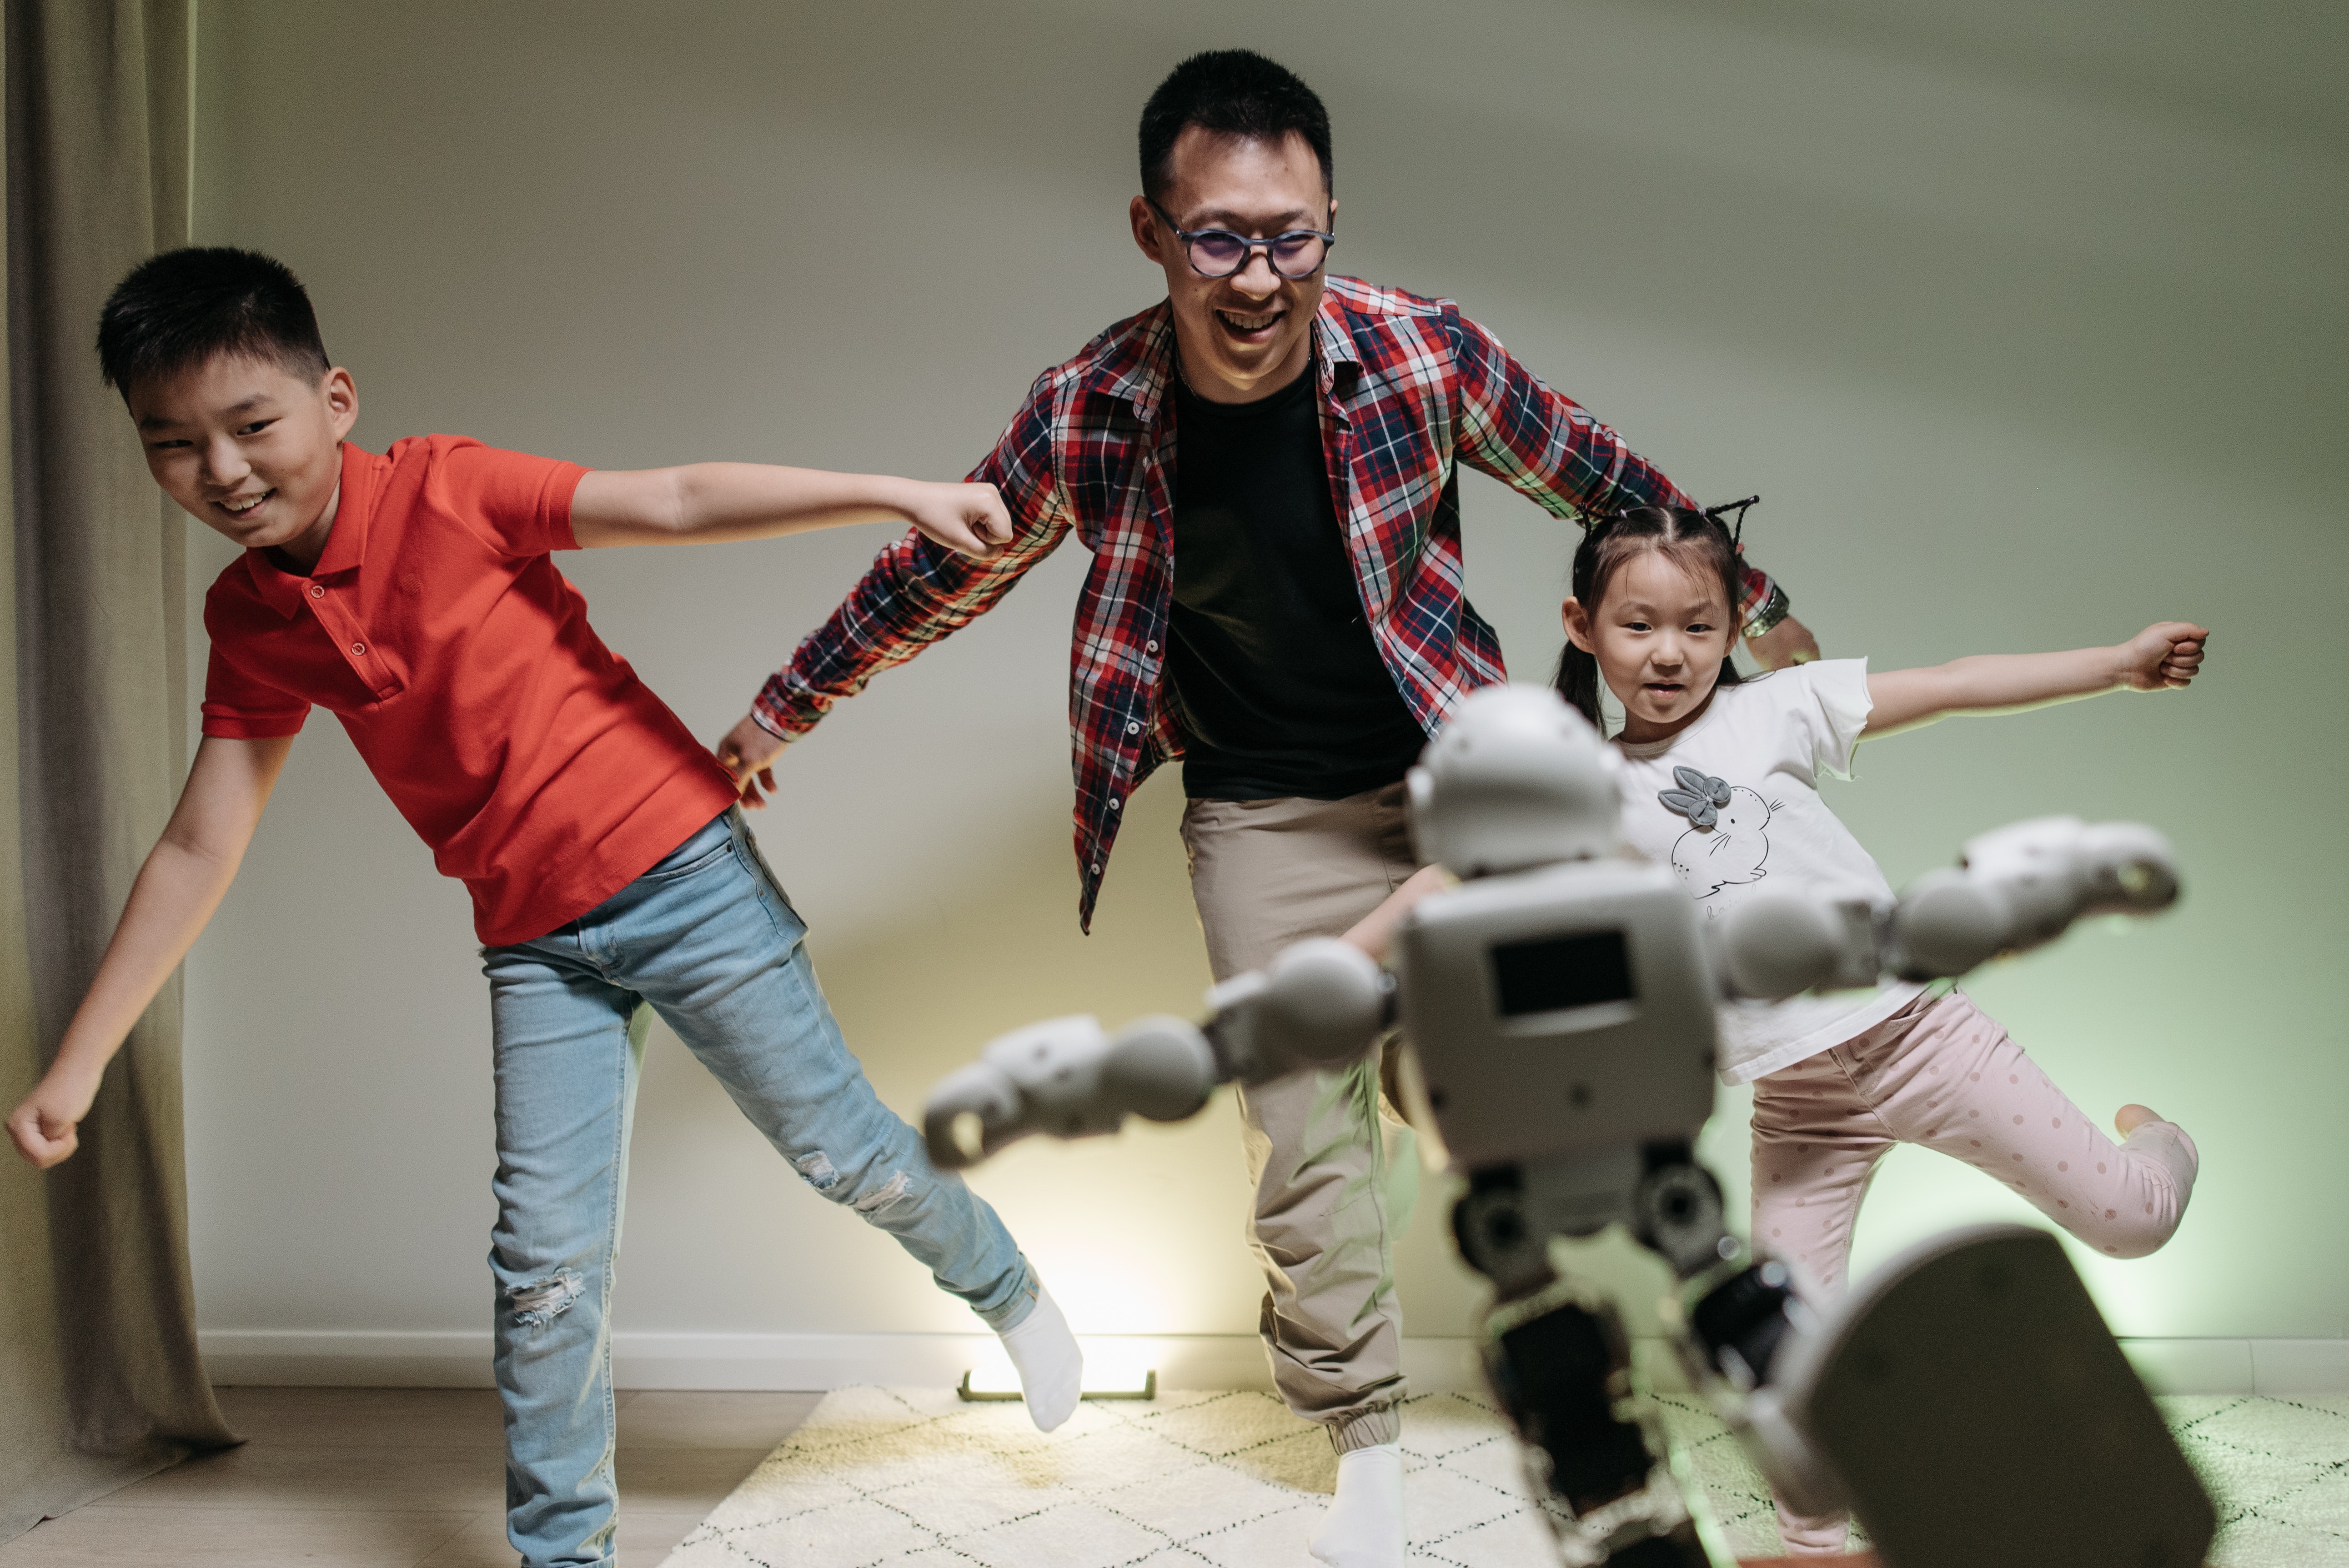 Robot imitating family